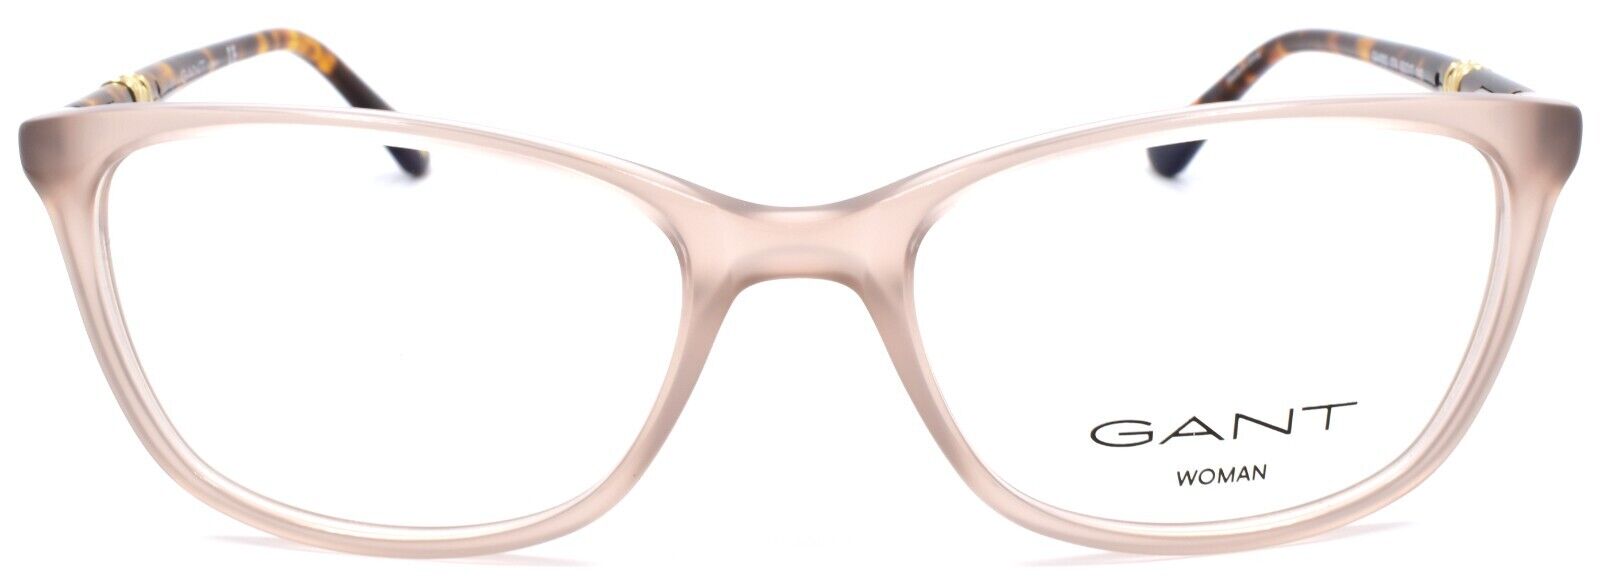 2-GANT GA4082 074 Women's Eyeglasses Frames 52-17-140 Gray Pink / Havana-664689917242-IKSpecs